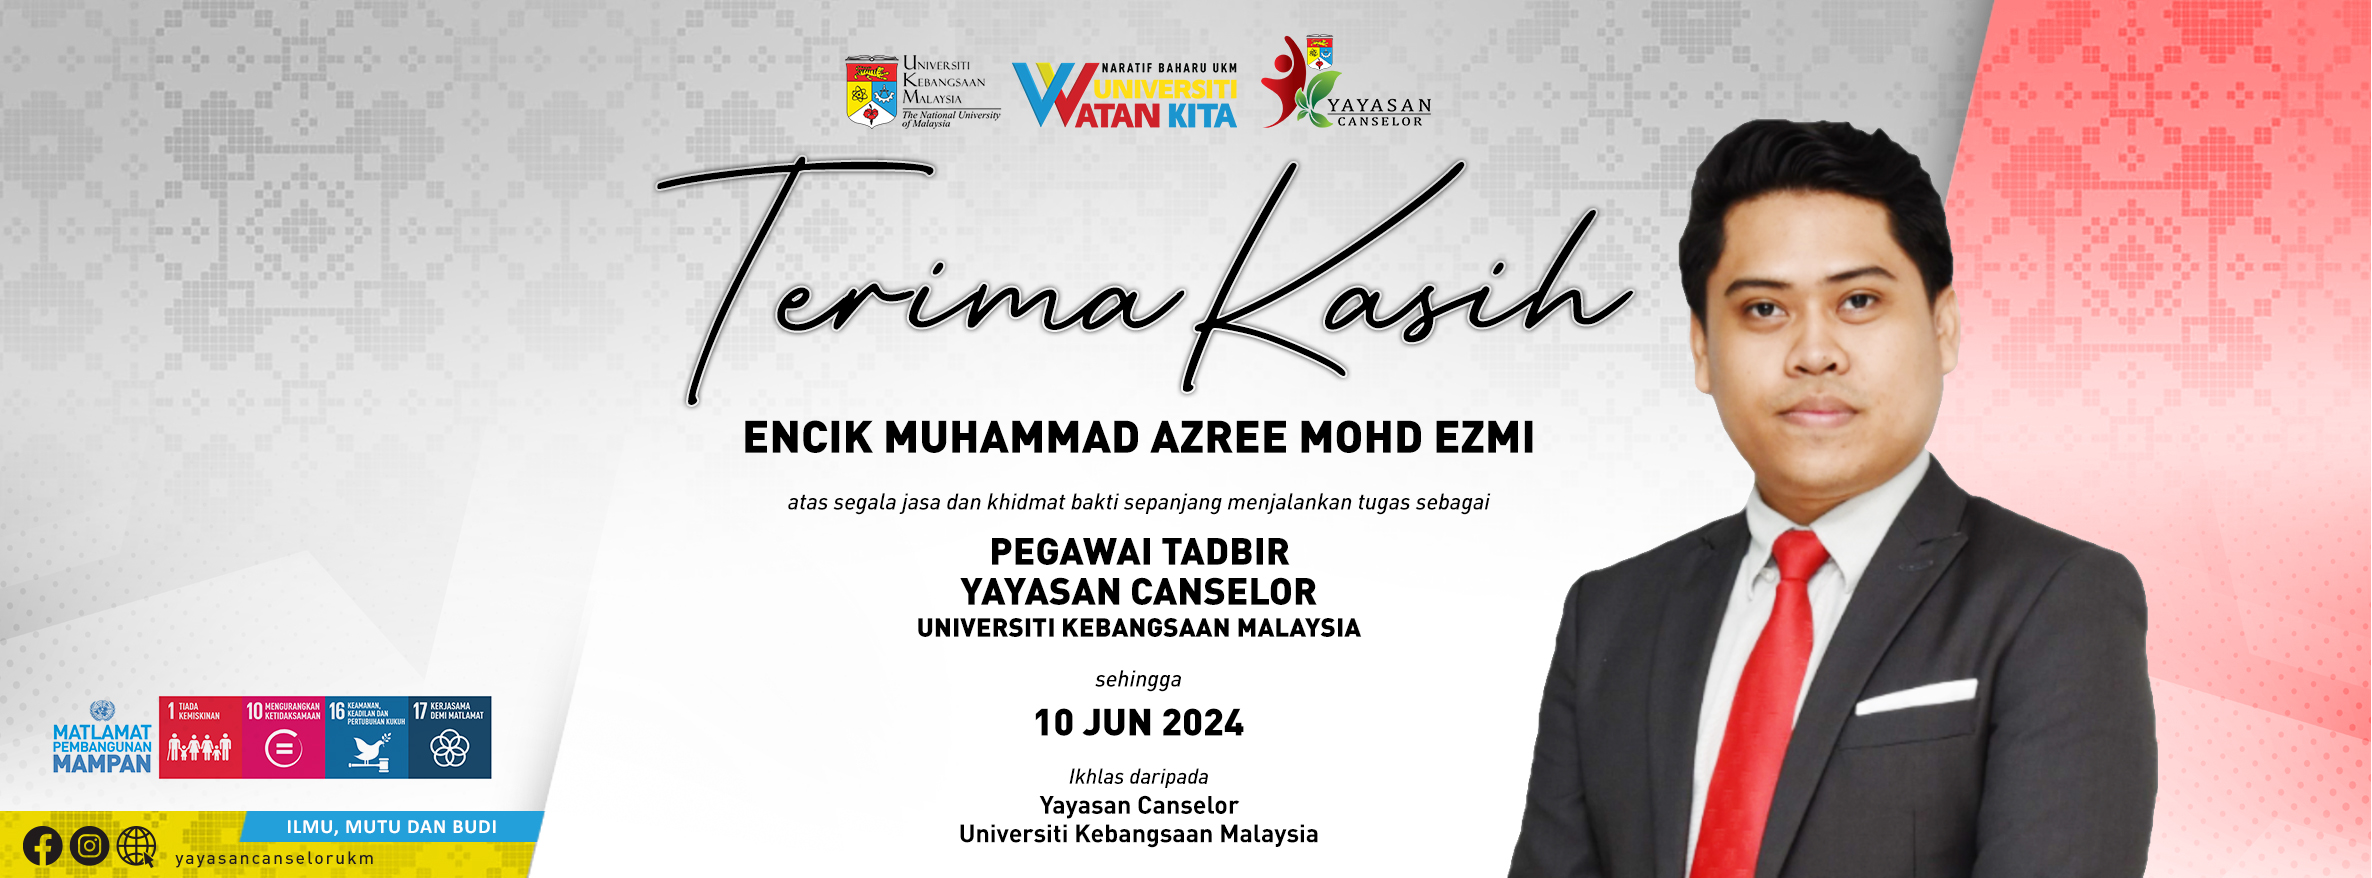 BANNER TERIMA KASIH-Encik Muhammad Azree Mohd Ezmi